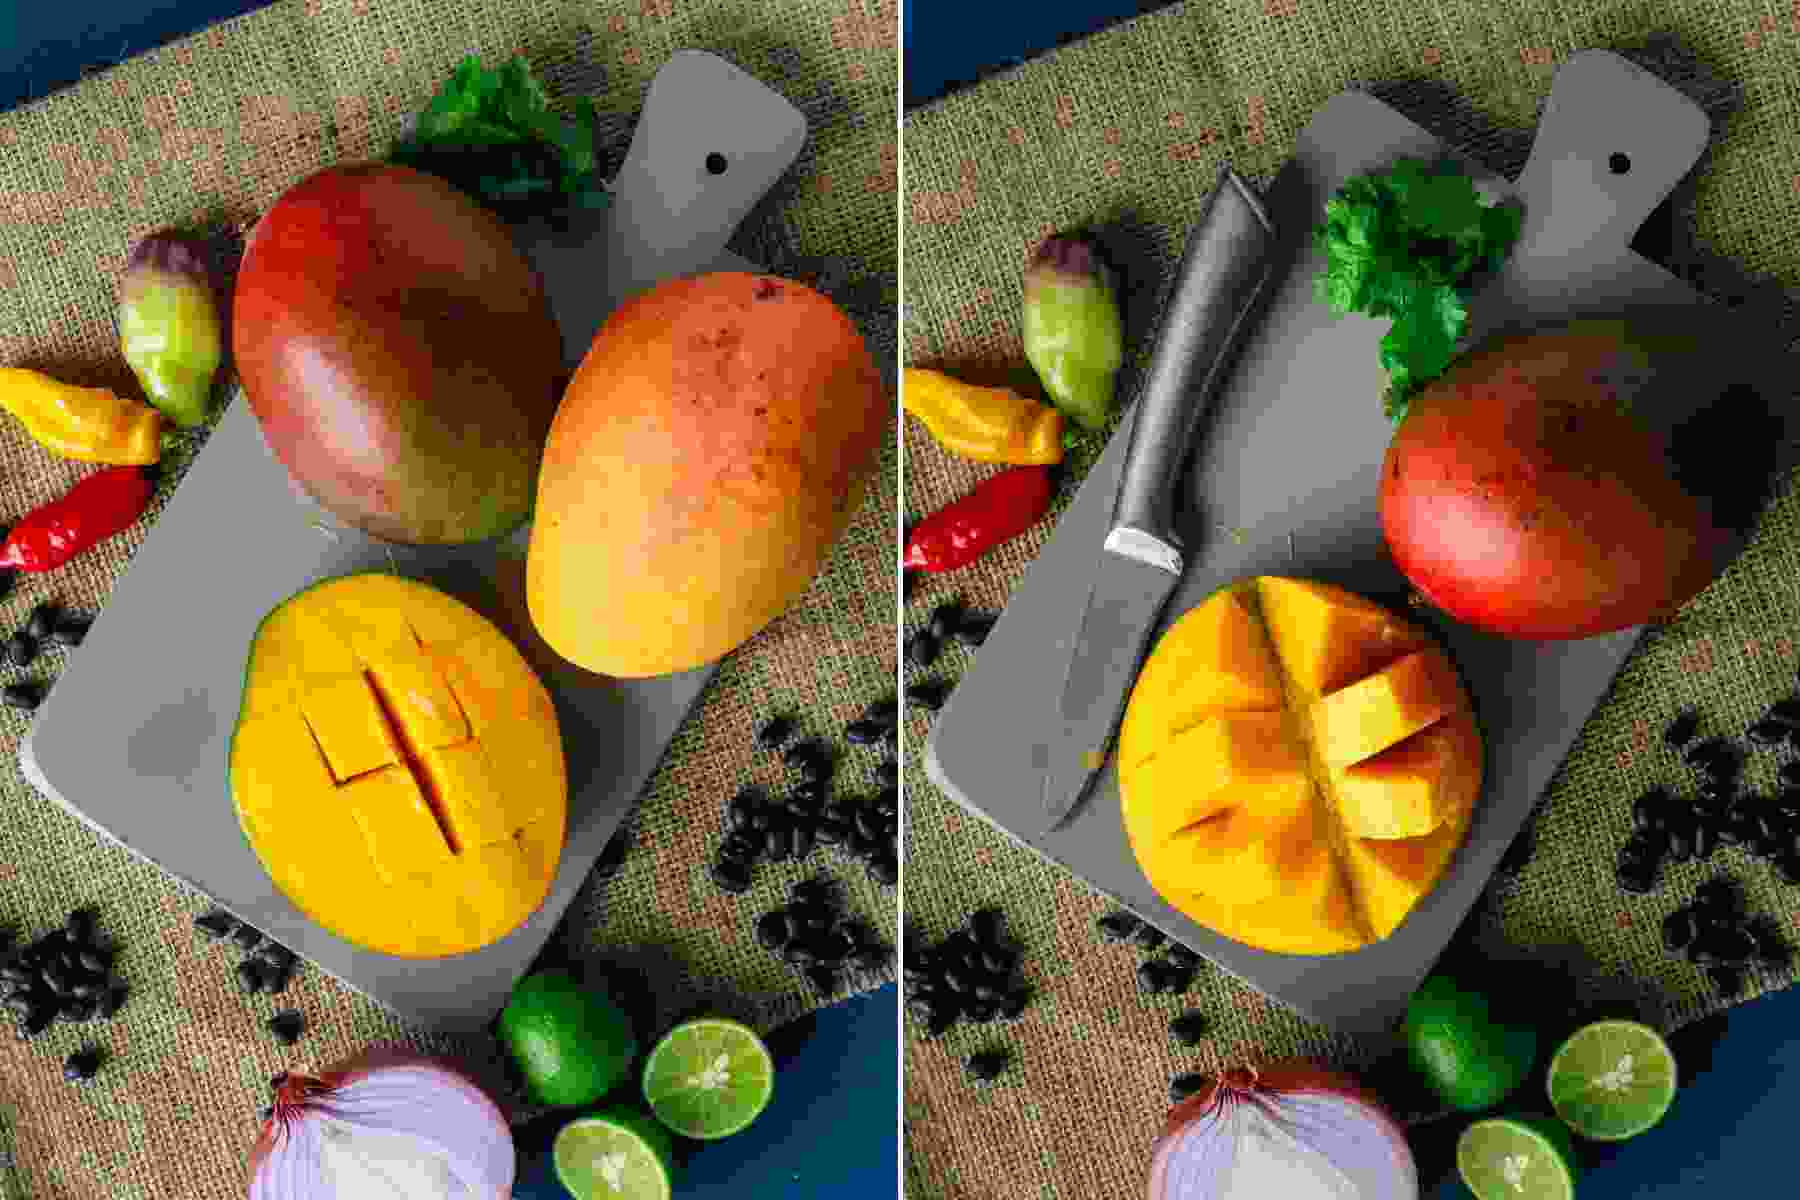 Showing how to cut mango.